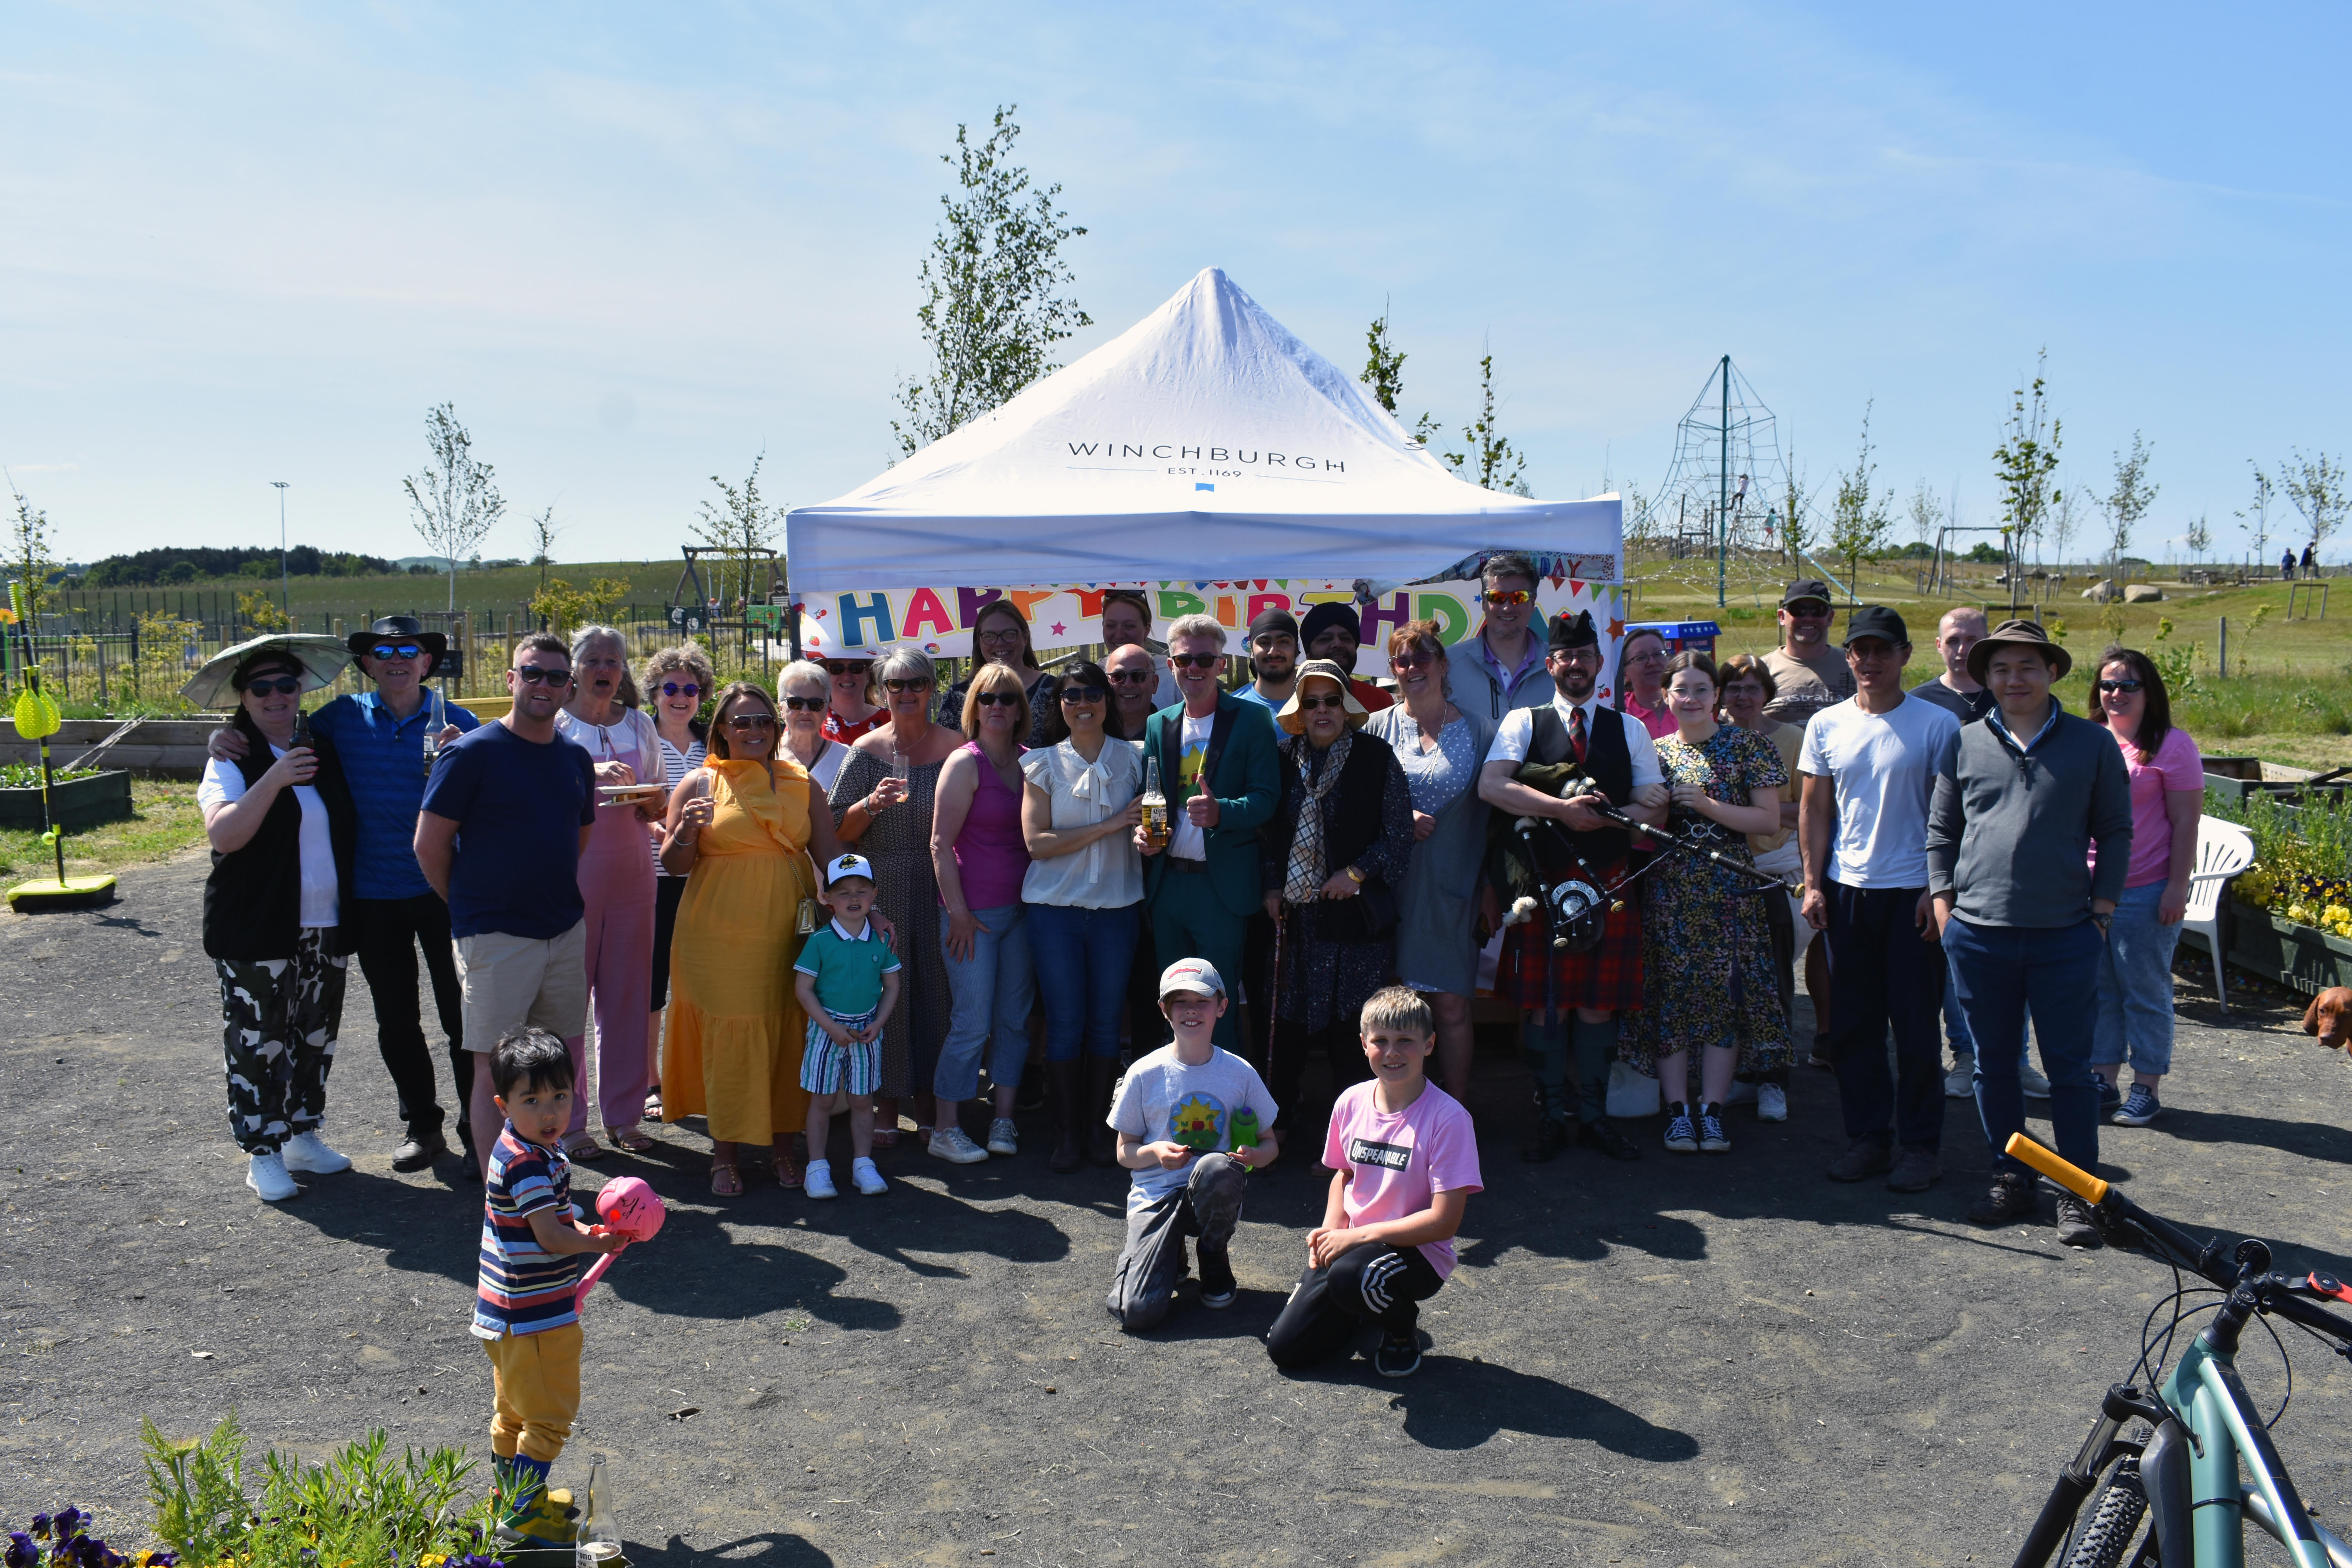 Community spirit in full bloom as Winchburgh groups celebrate milestone anniversaries